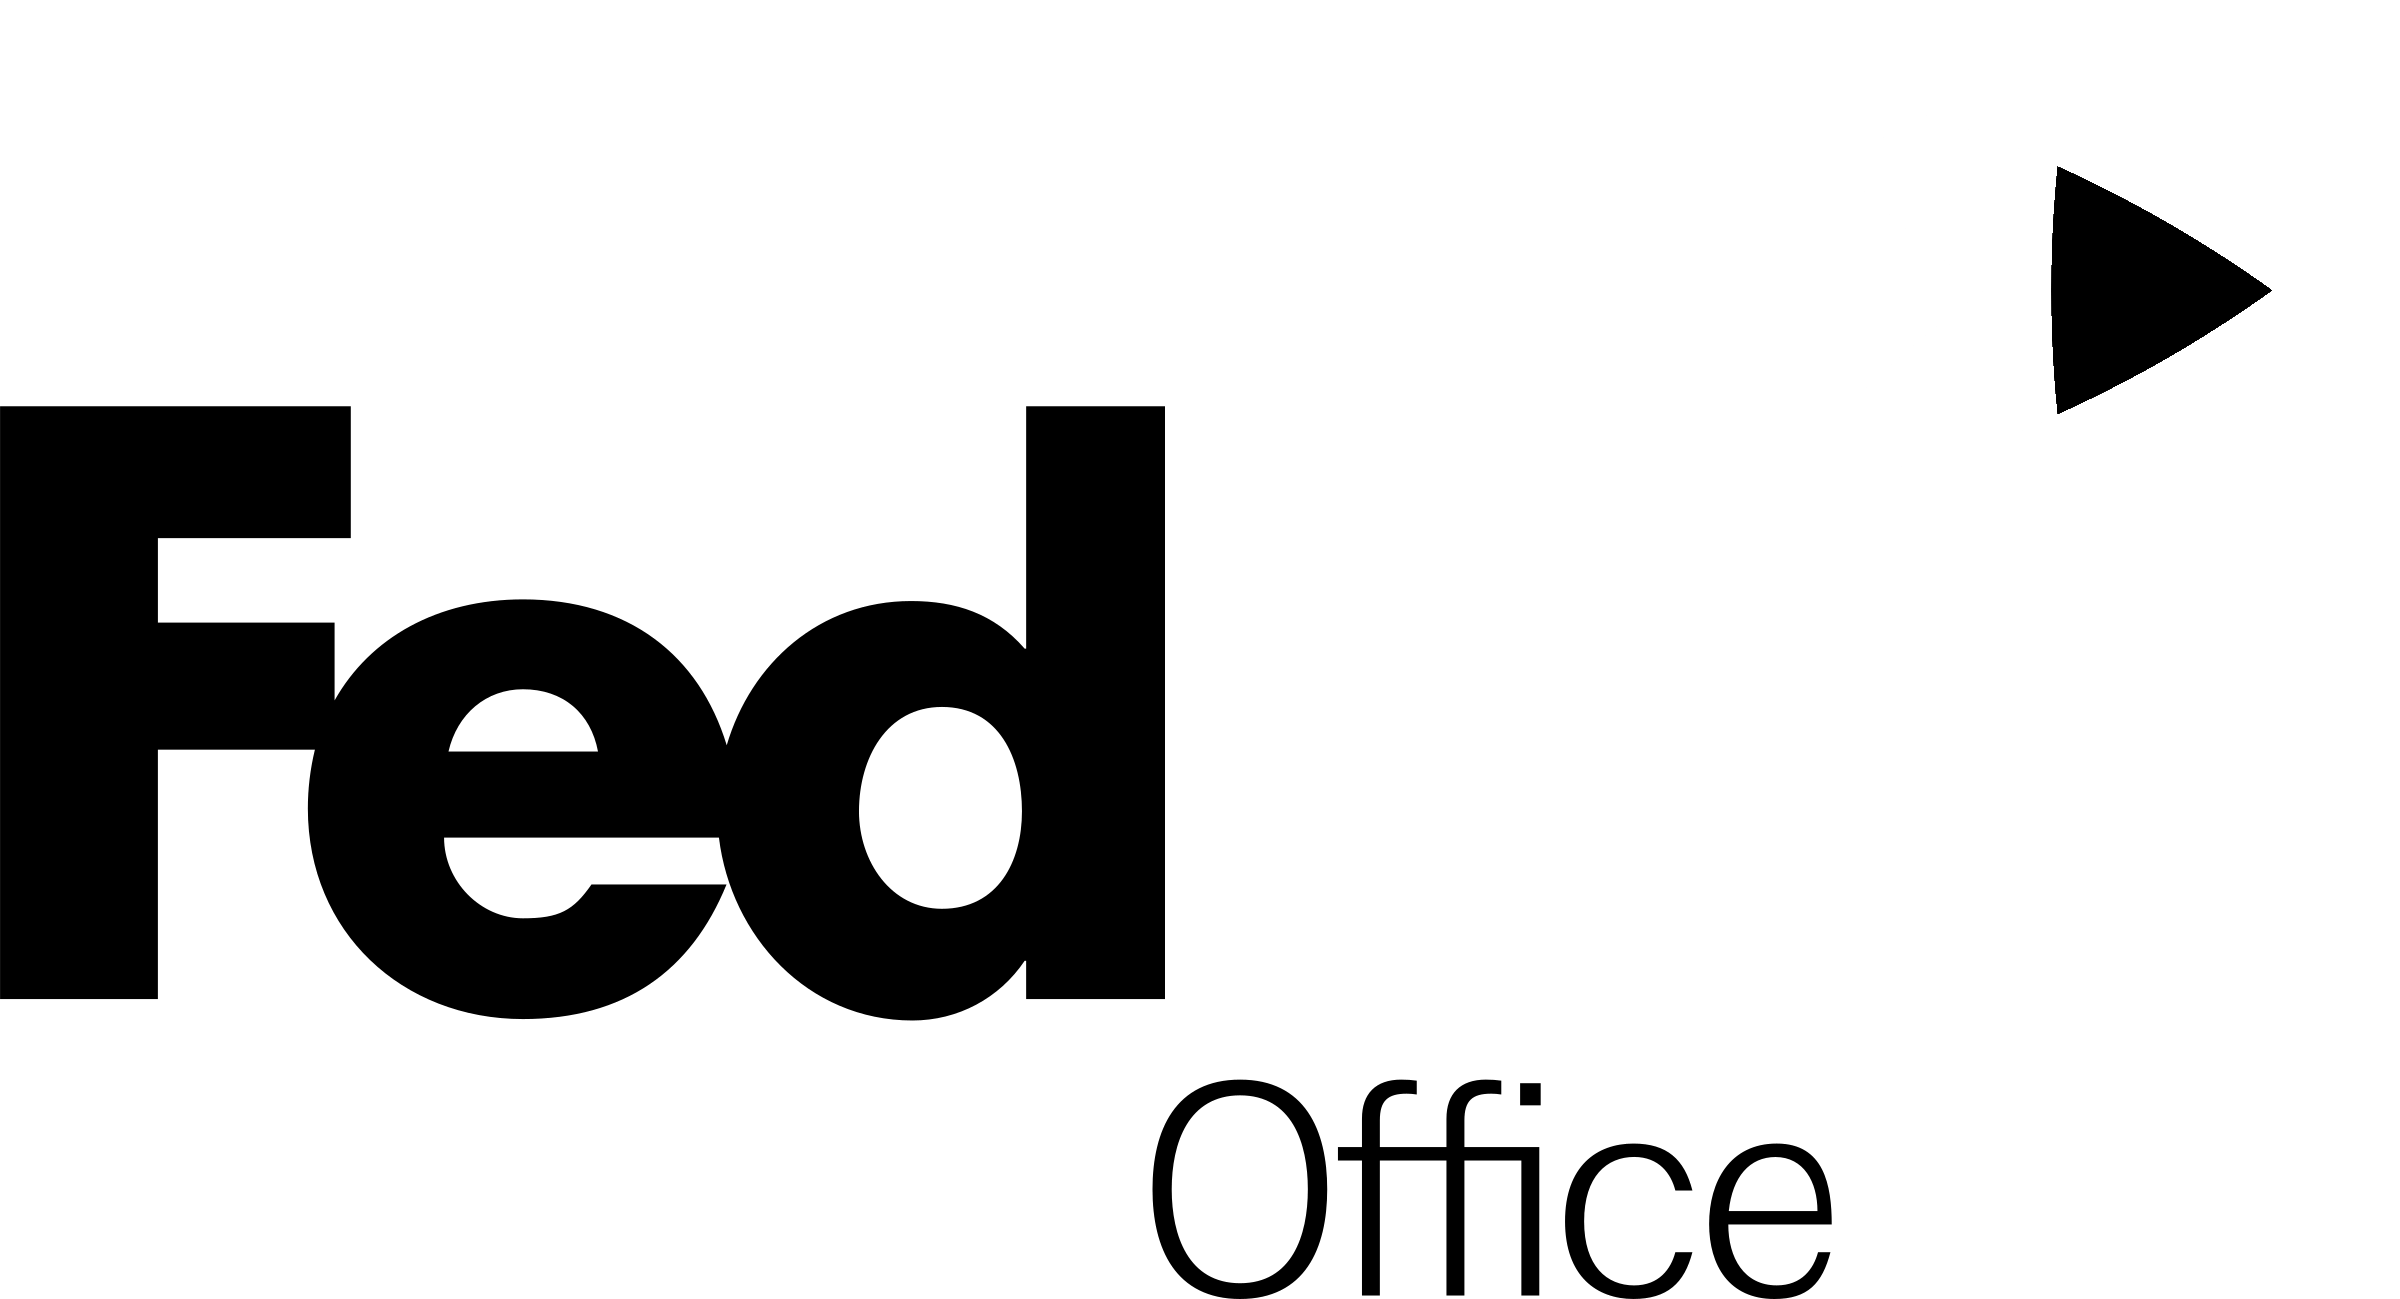 FedEx Office Logo - FedEx Office Logo PNG Transparent & SVG Vector - Freebie Supply